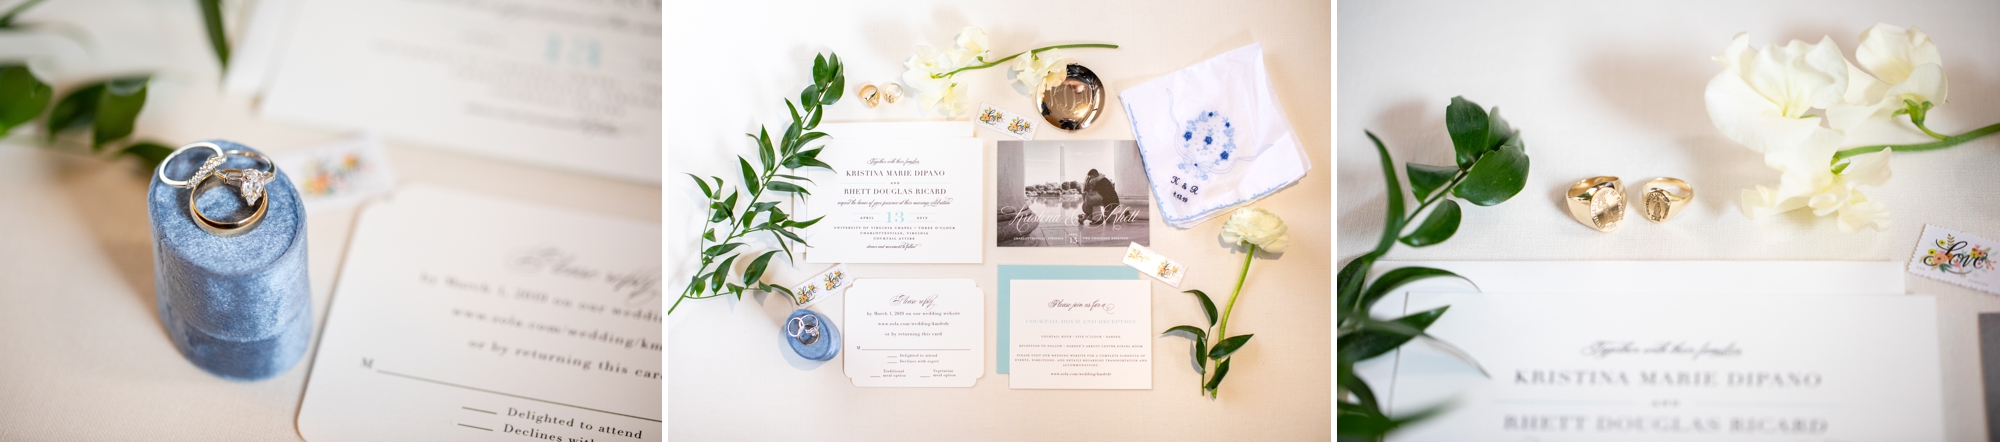 UVA Wedding Details Photography